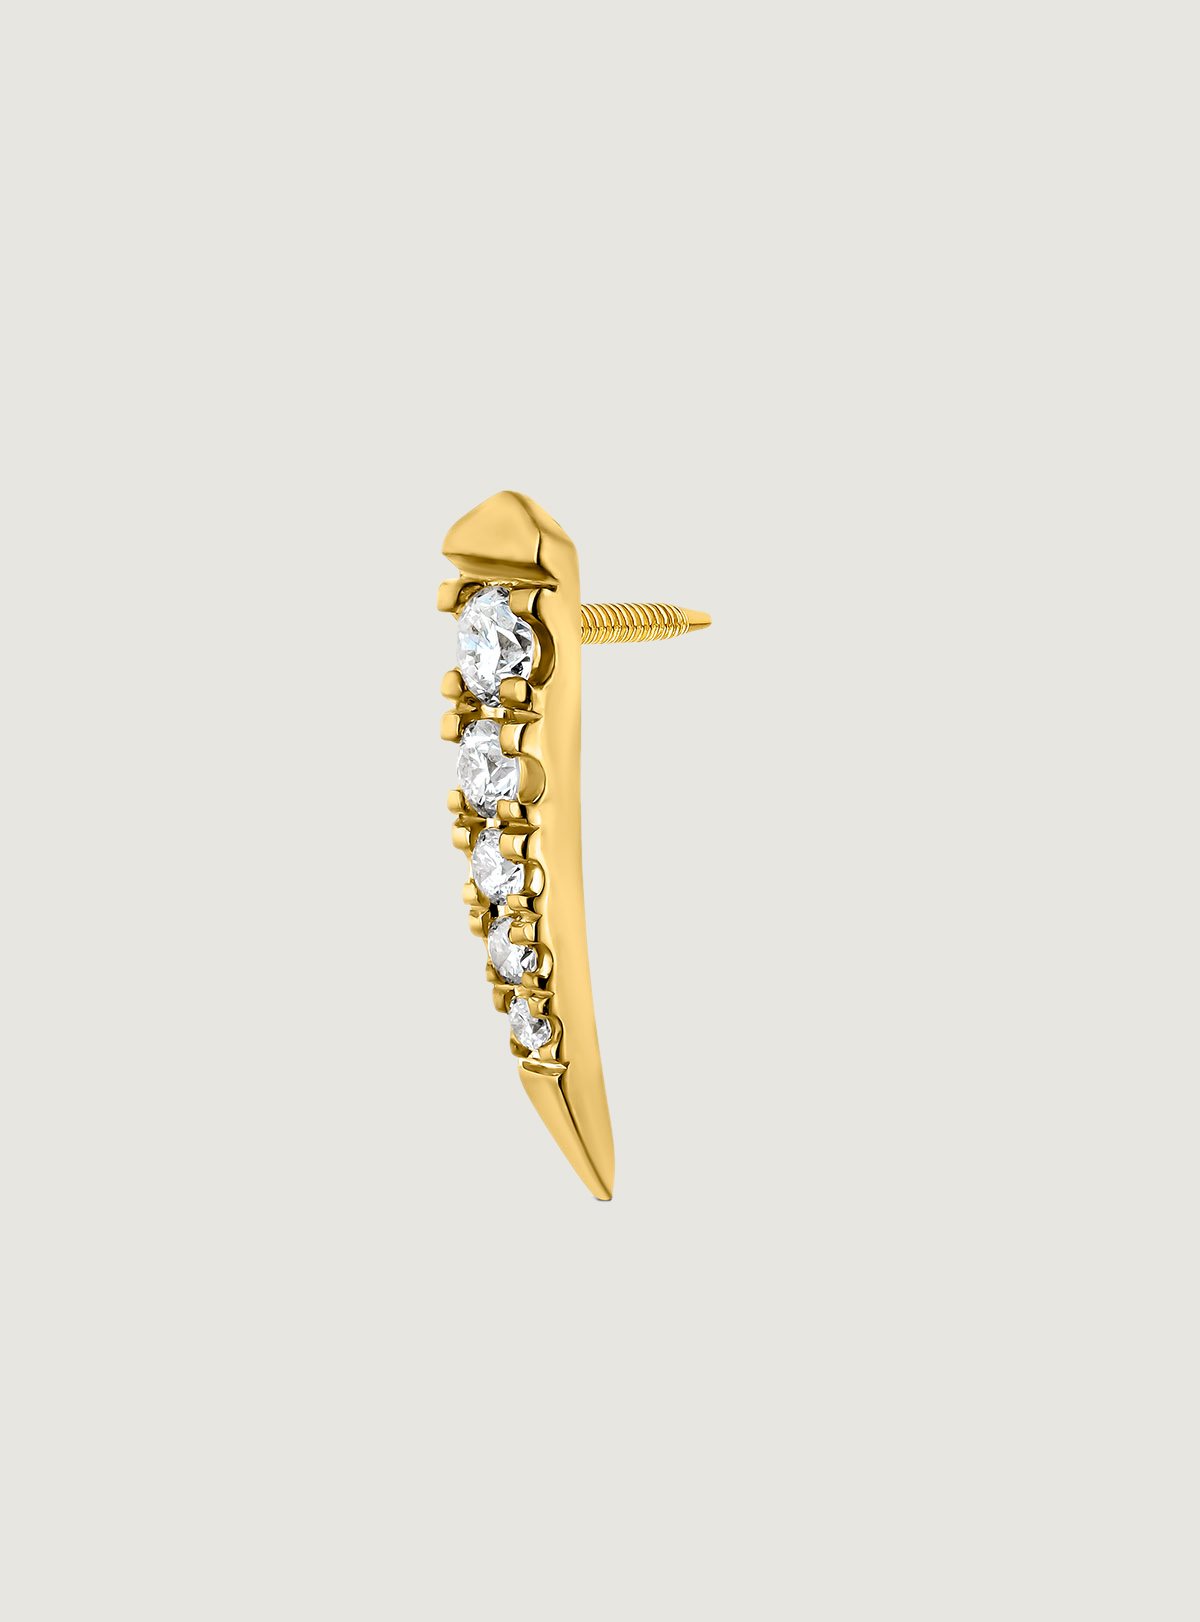 Individual 18K yellow gold earring with diamonds.